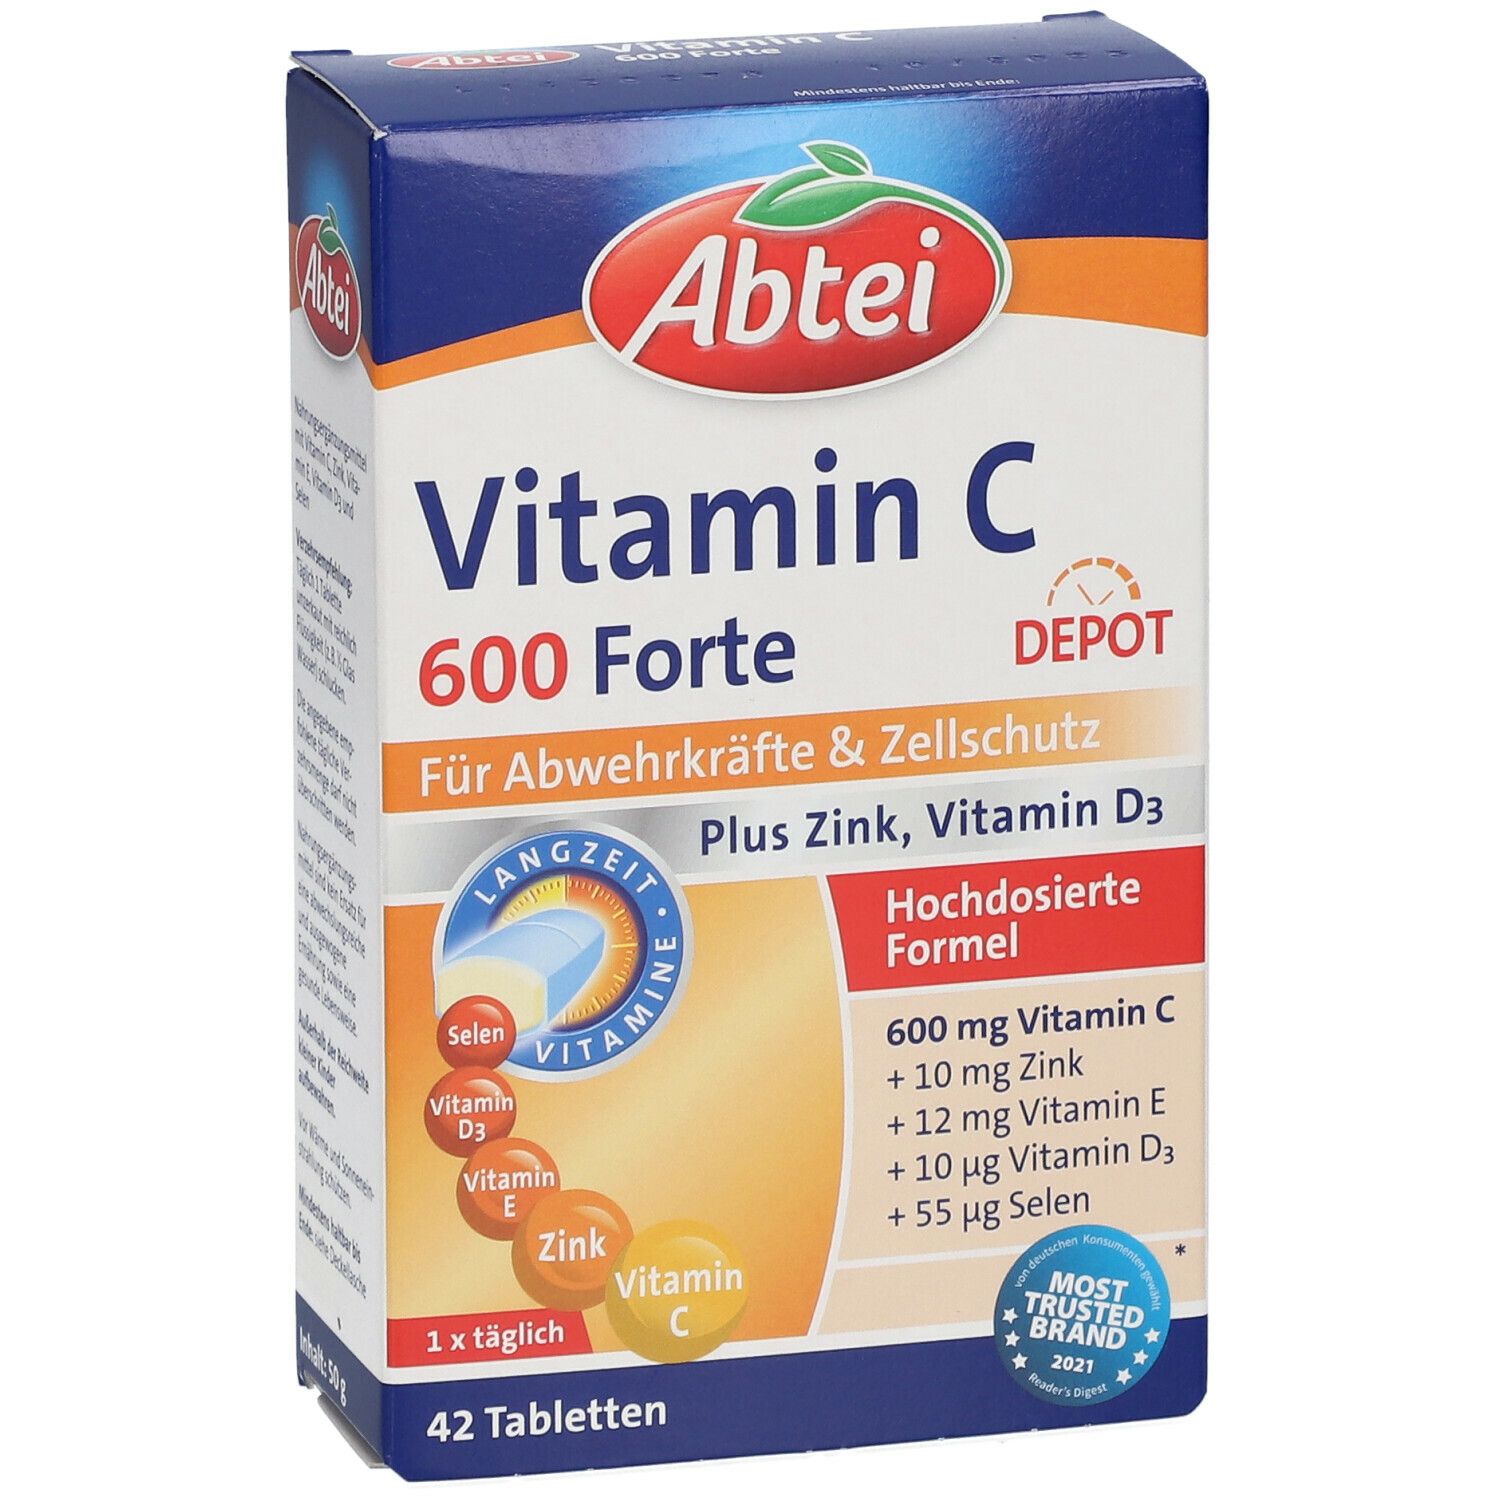 Abtei Vitamin C 600